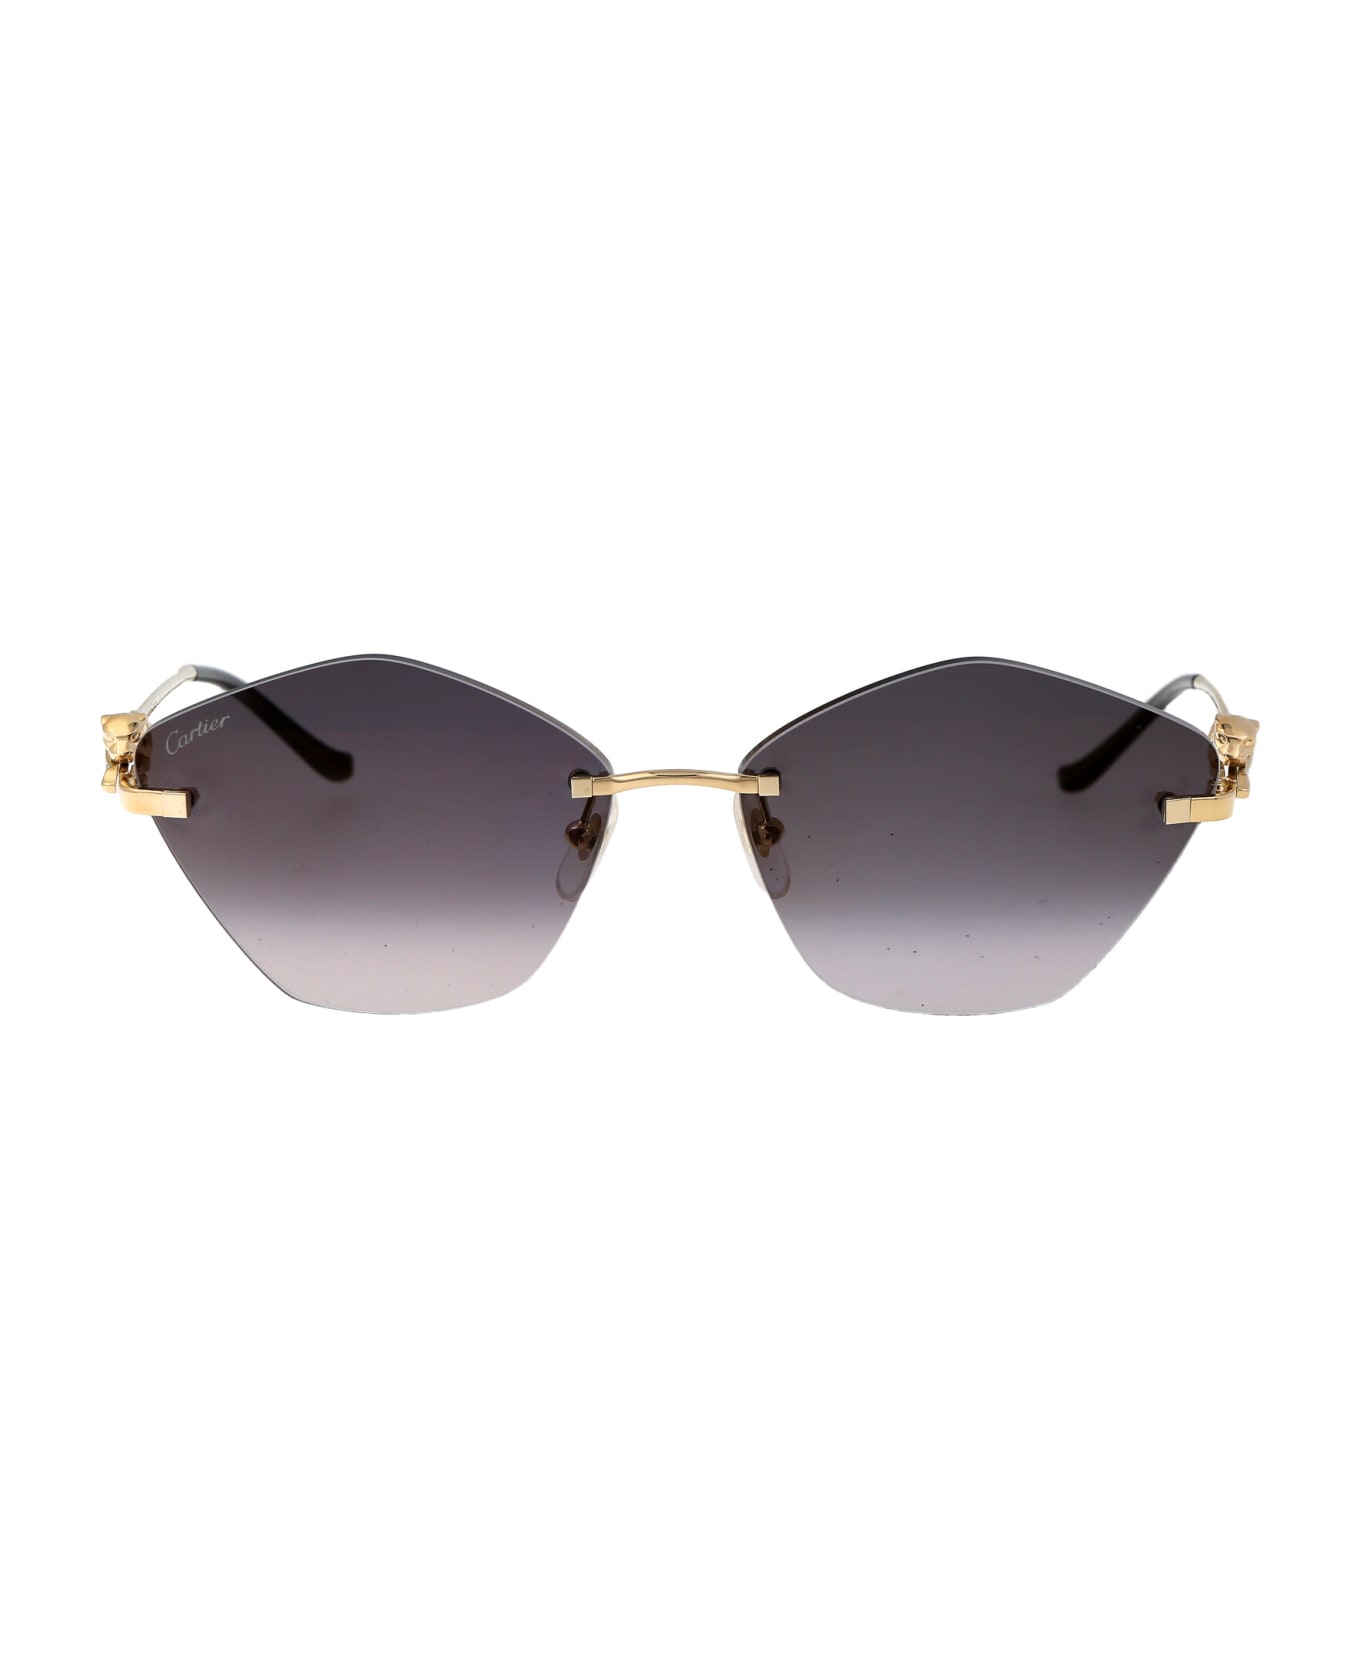 Cartier Eyewear Ct0429s Sunglasses - 001 GOLD GOLD GREY